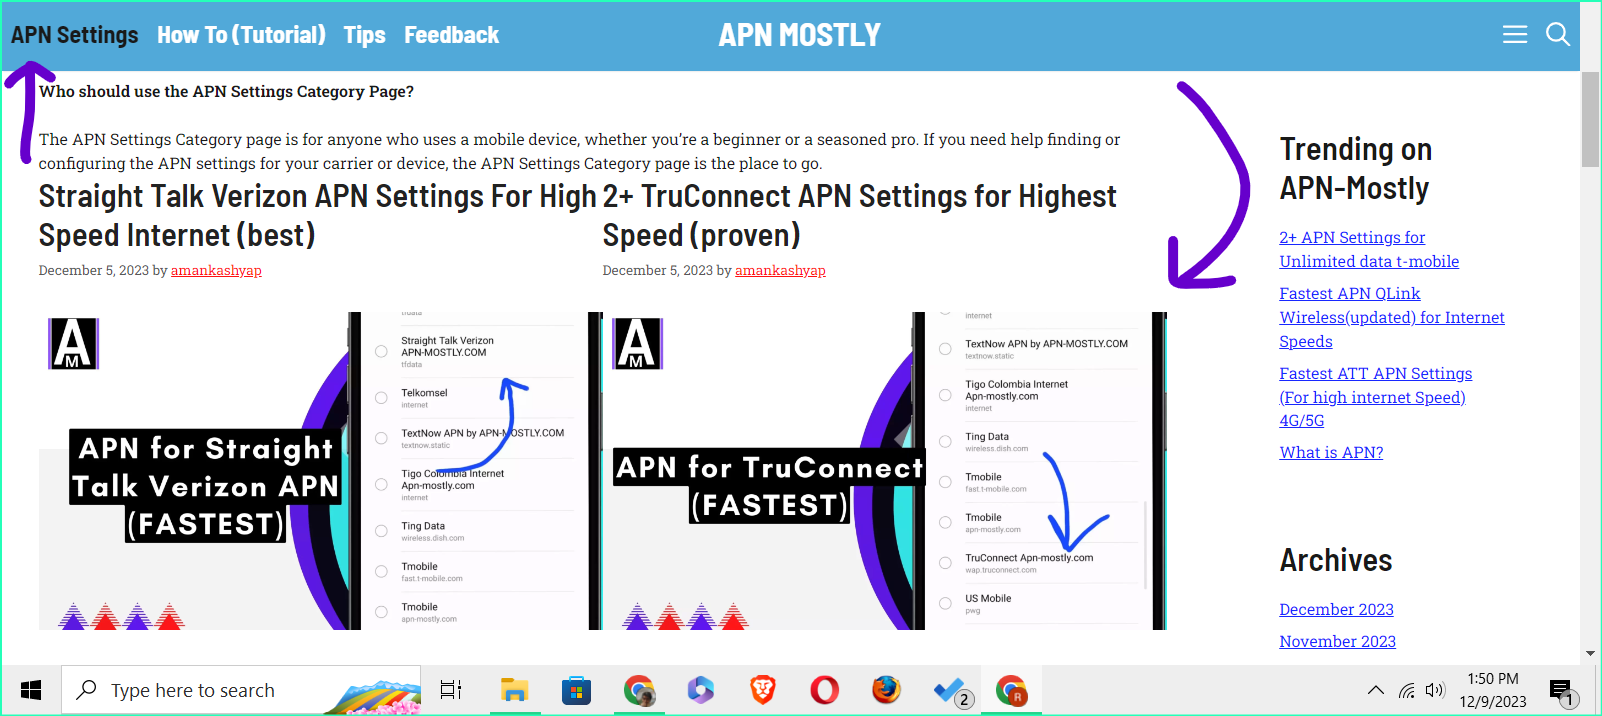 apn-mostly.com apn settings category apge